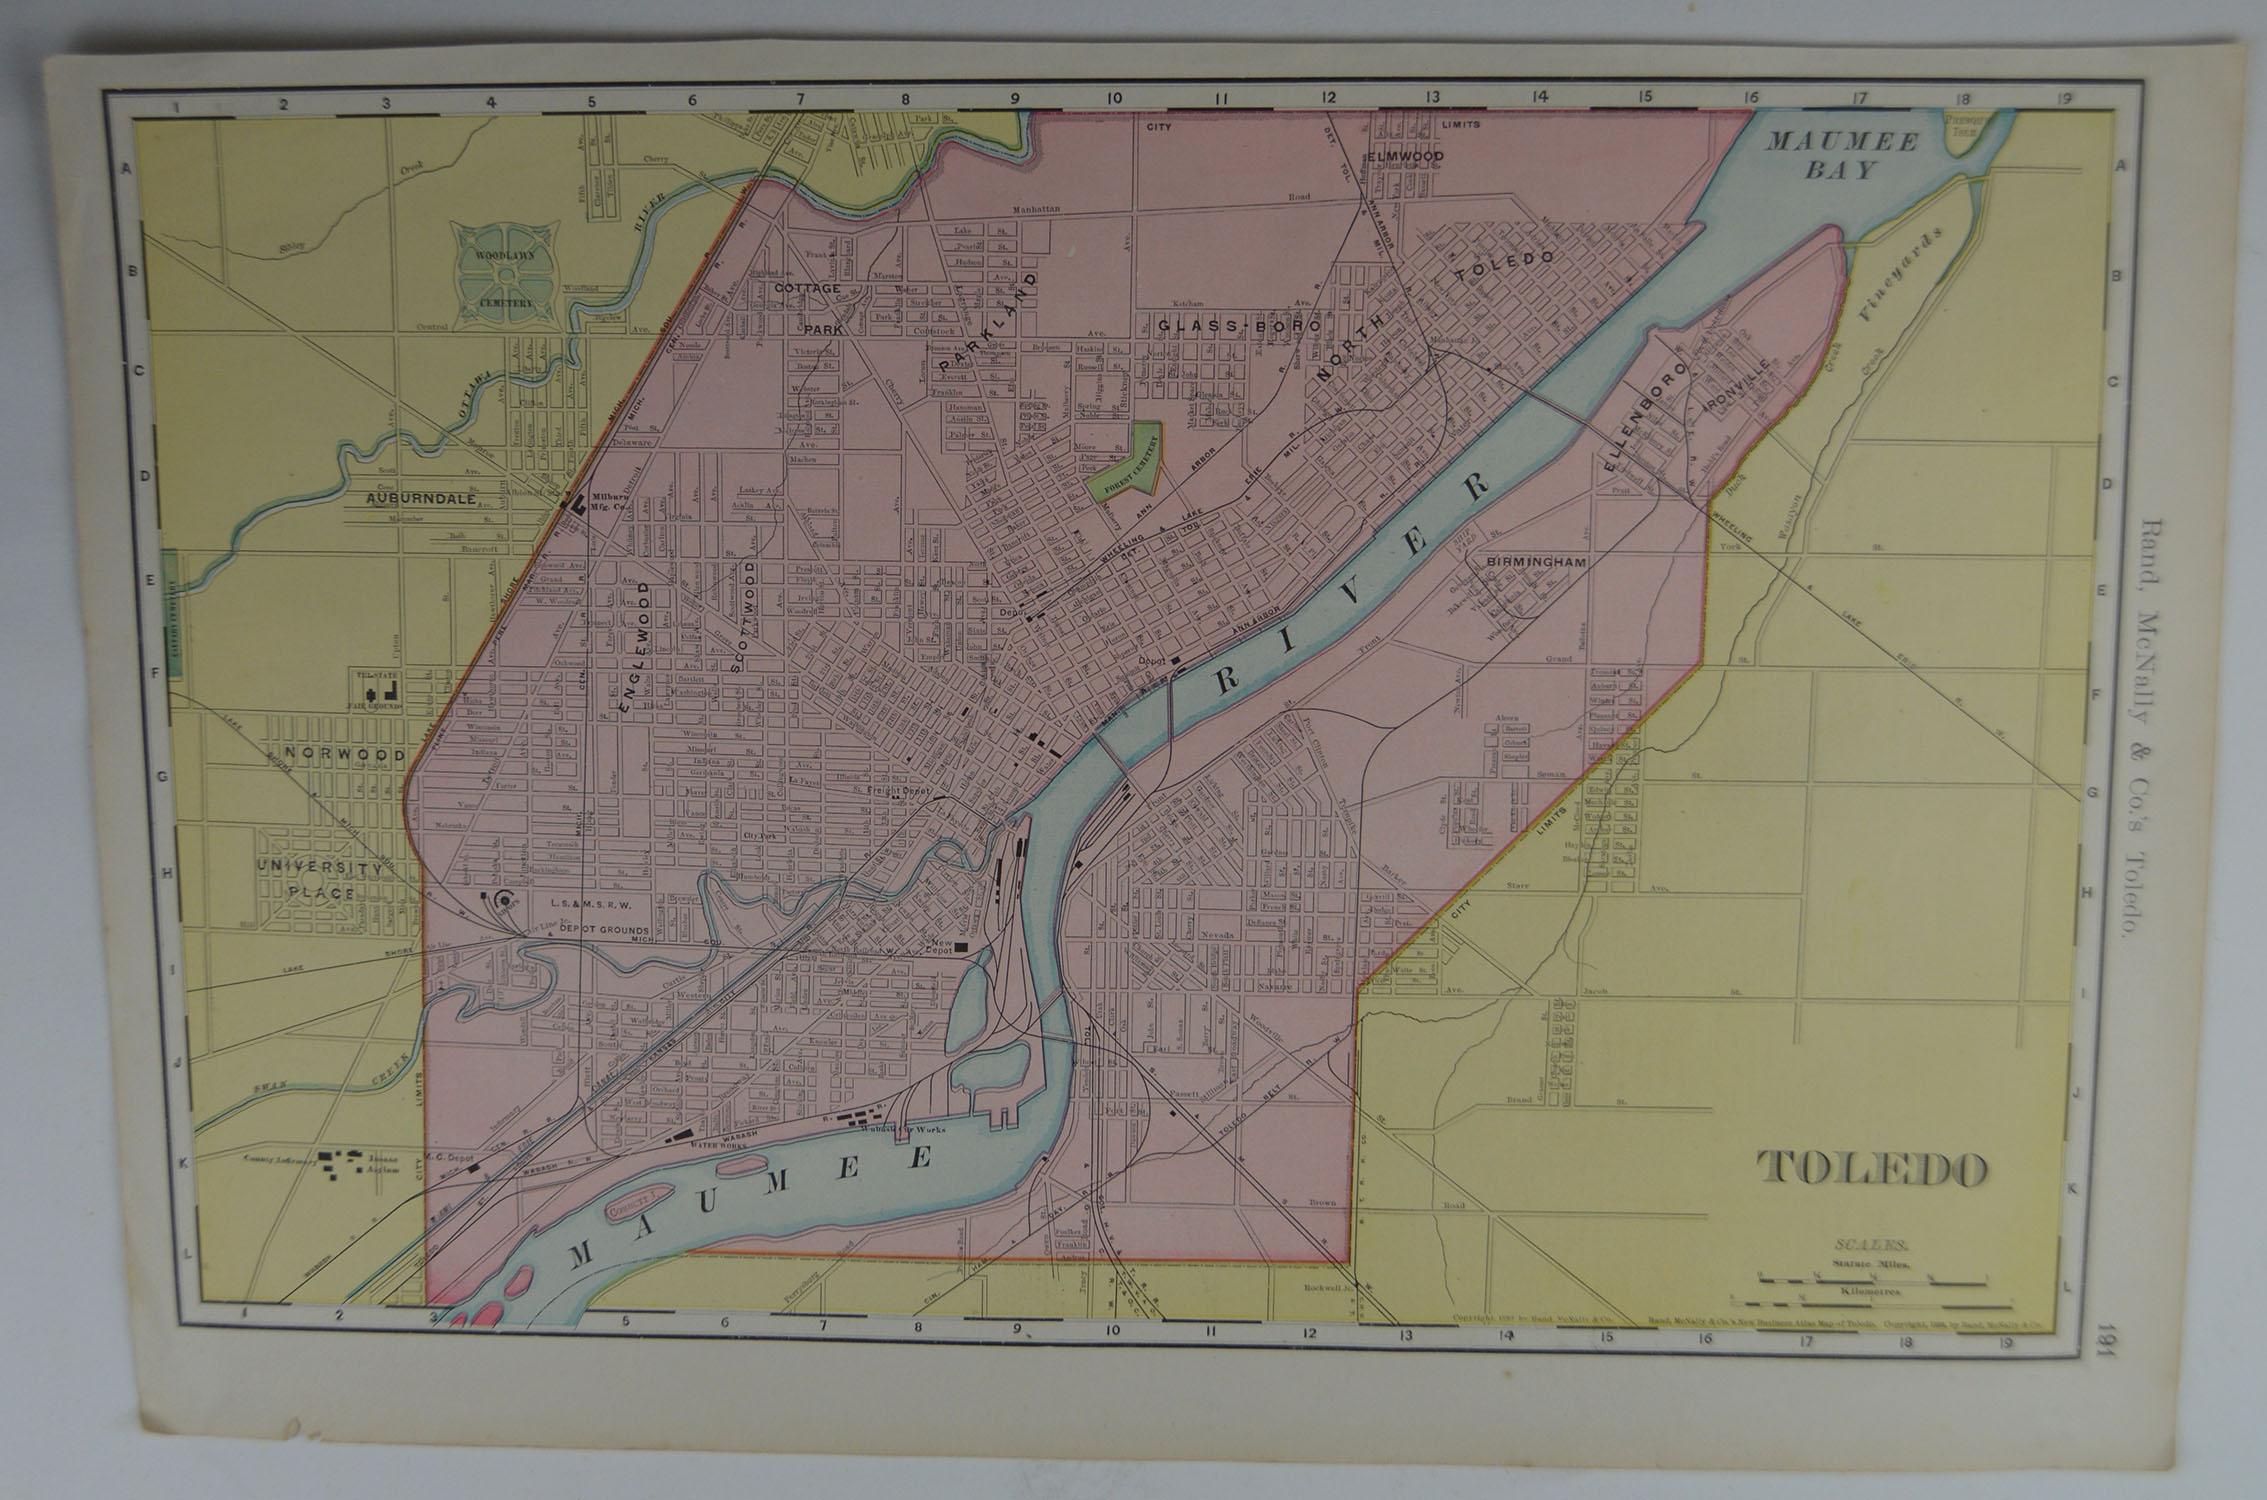 American Original Antique City Plan of Toledo, Ohio USA, circa 1900